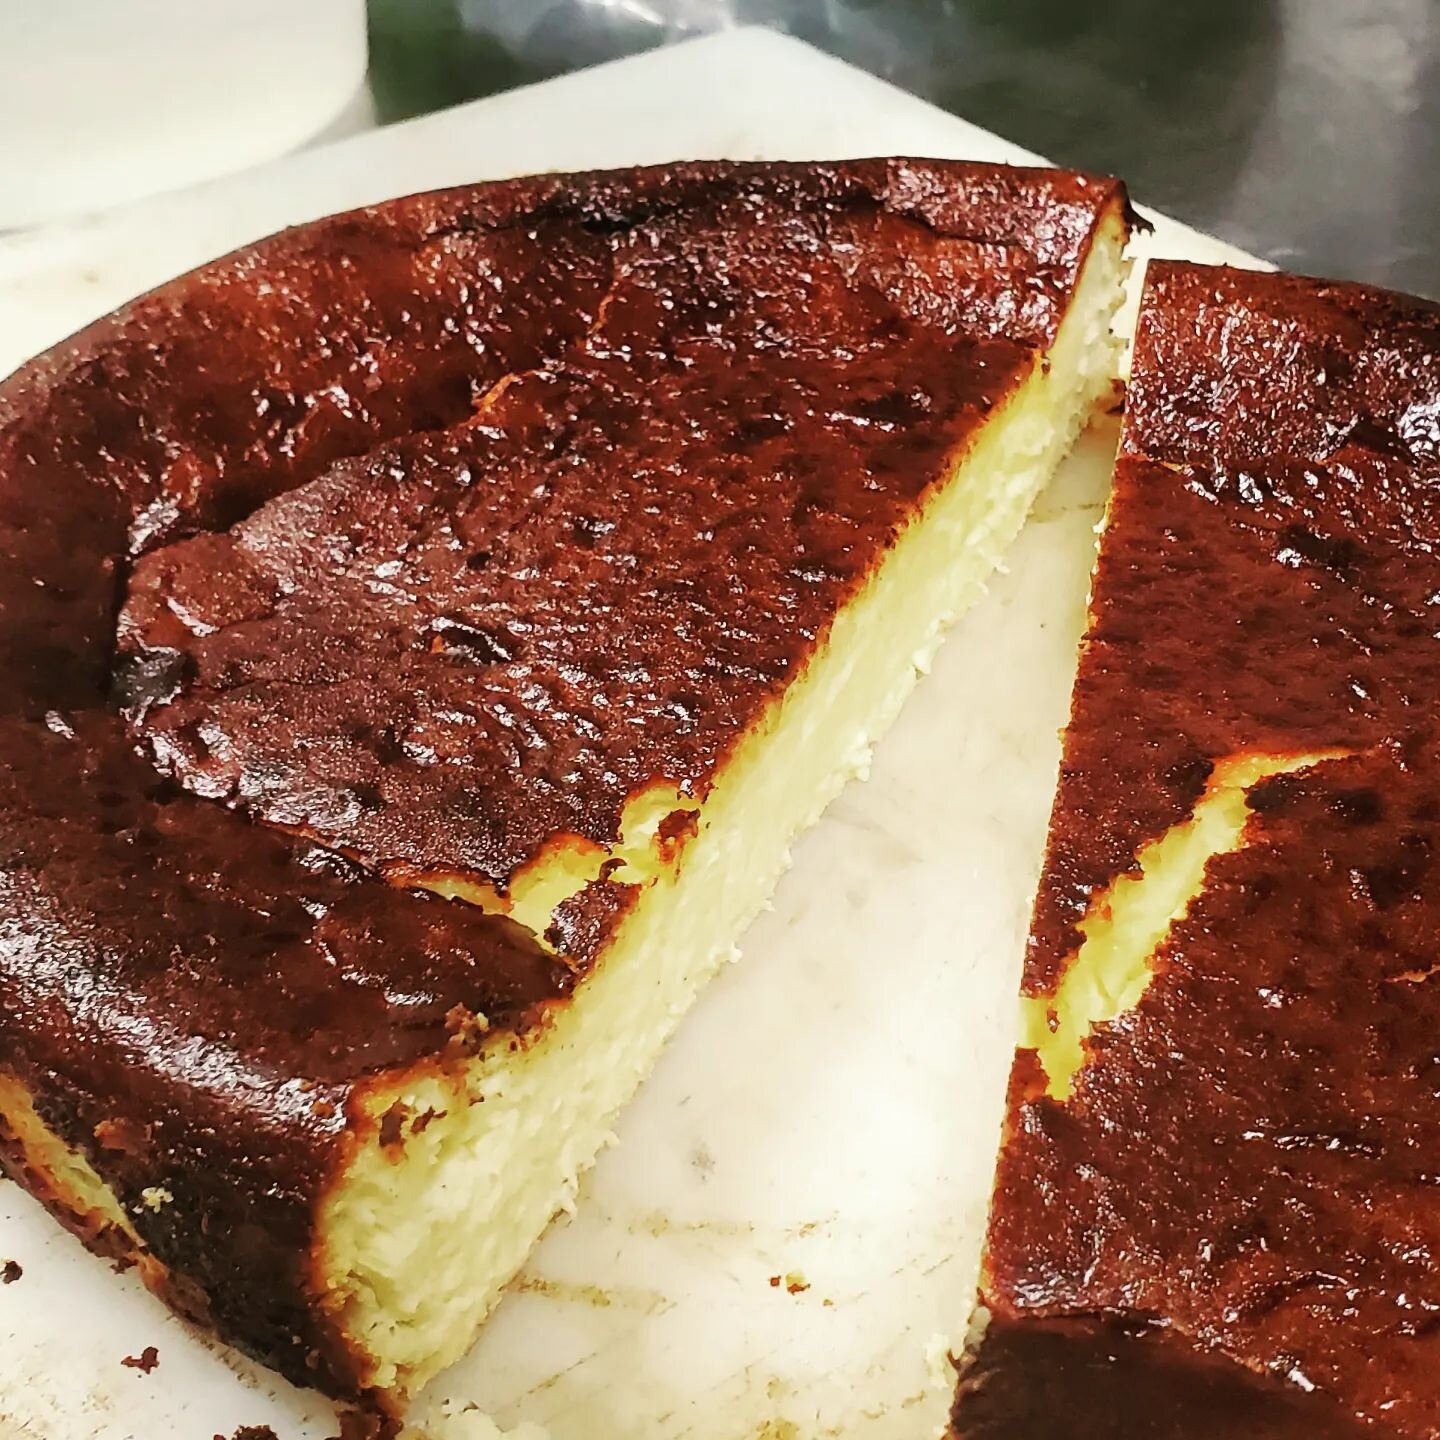 Basque cheesecake om our dessert menu tonight.
.
.
.
@culinarychefs @chefsroll @chefstalk @foodartchefs @chefstoday @army_of_chefs @goodfood.gallery @chefsplateform @theartofplating
@discovering_depoe_bay_oregon
#finedining #artofplating #gastronomy 